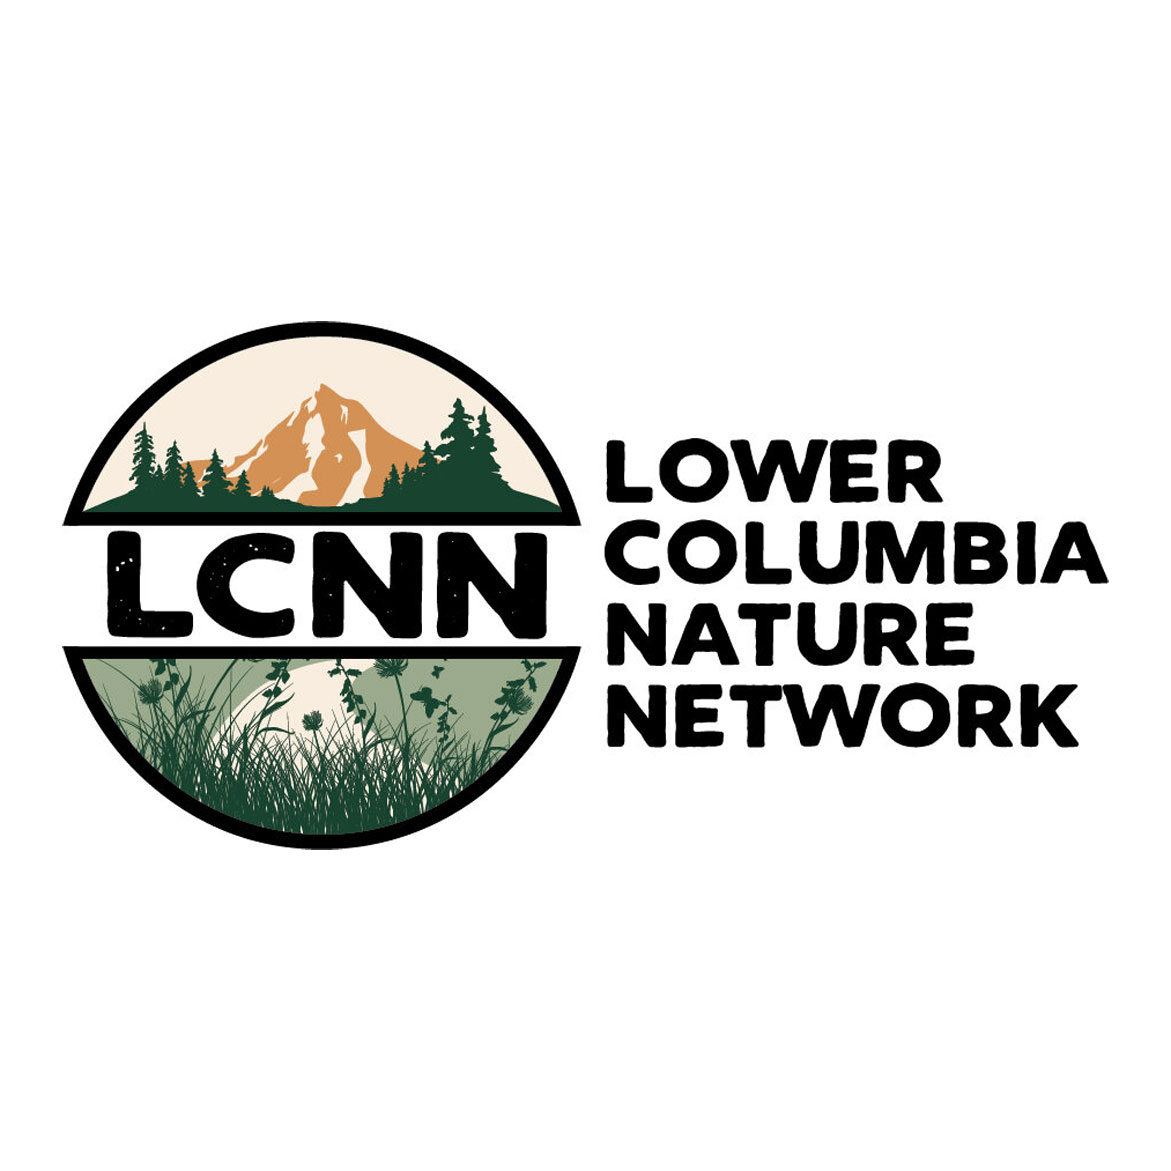 Lower Columbia Nature Network logo